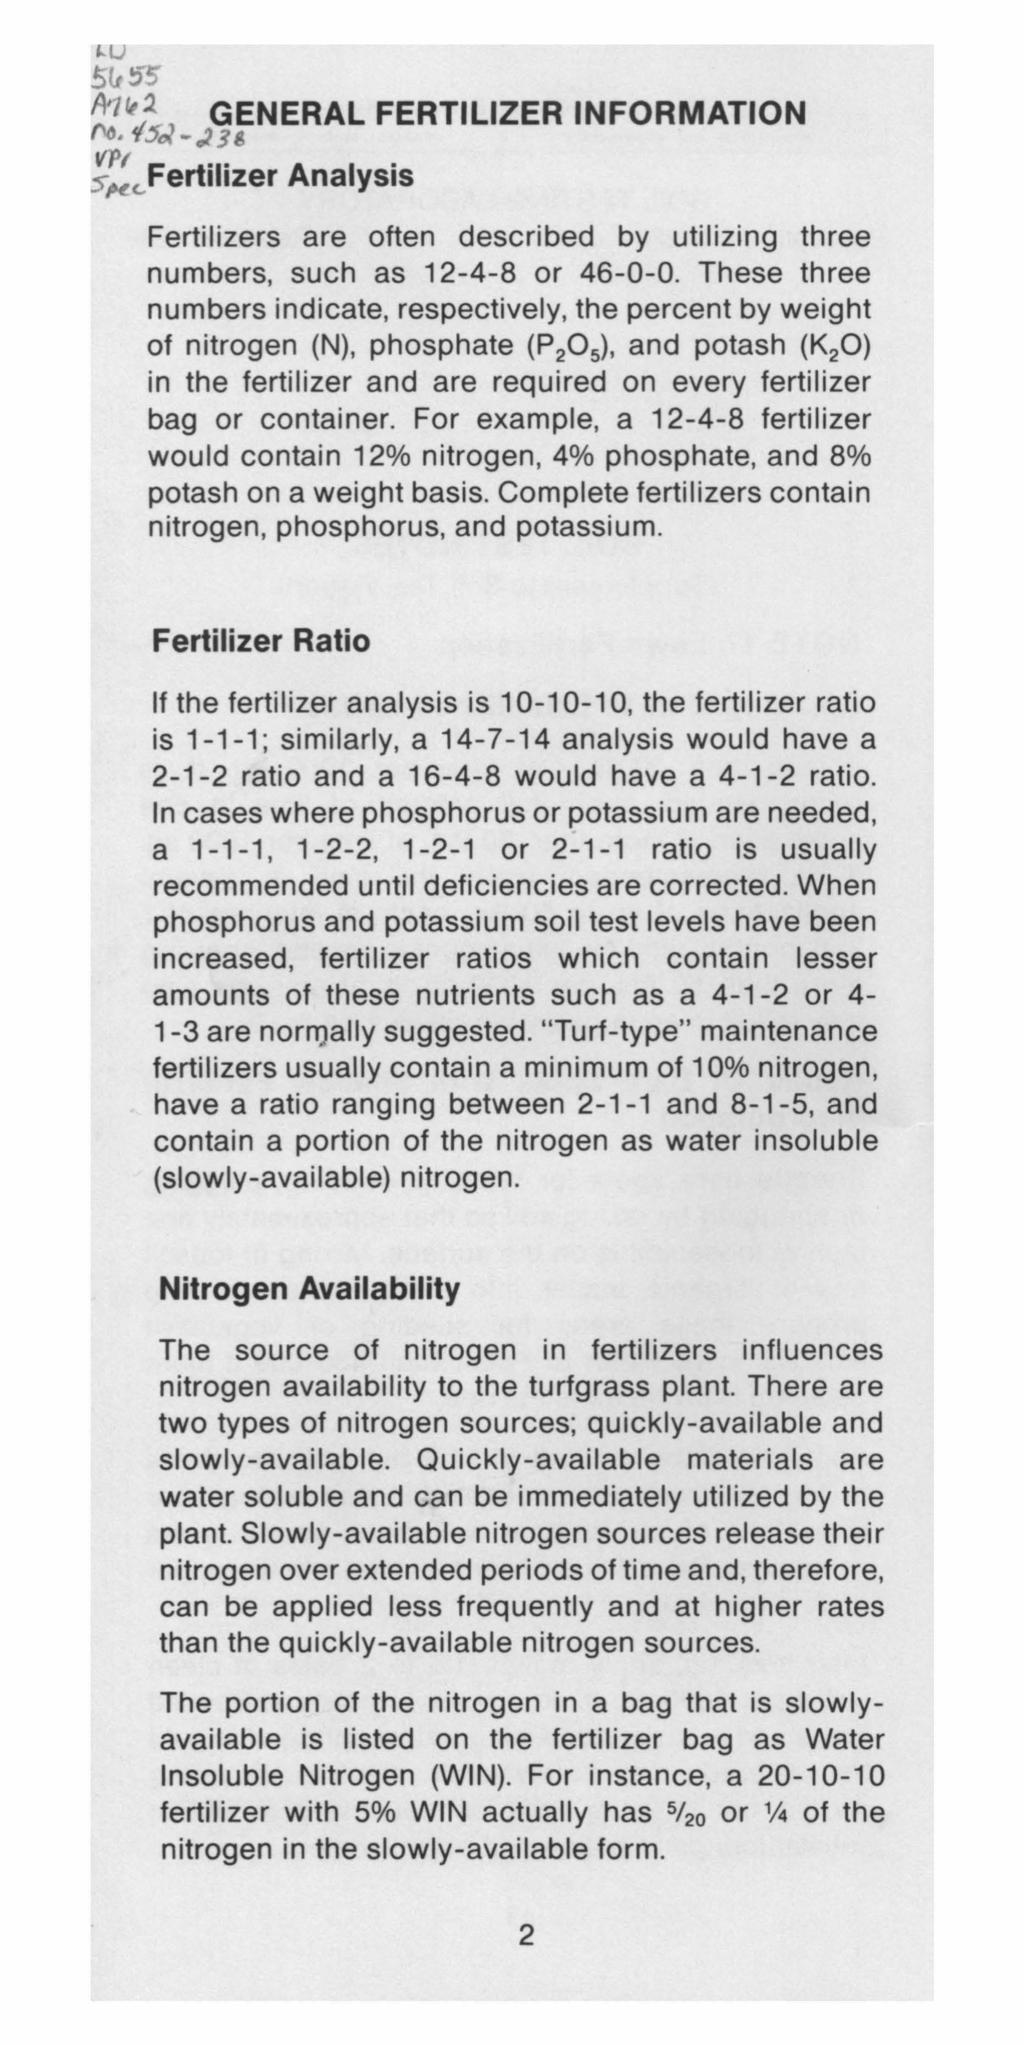 f..u 5Ct ~,-5 ~:'~/~, GENERAL FERTILIZER INFORMATION, "' T' J(lf -.12 3 g z,_fertilizer Analysis Fertilizers are often described by utilizing three numbers, such as 12-4-8 or 46-0-0.